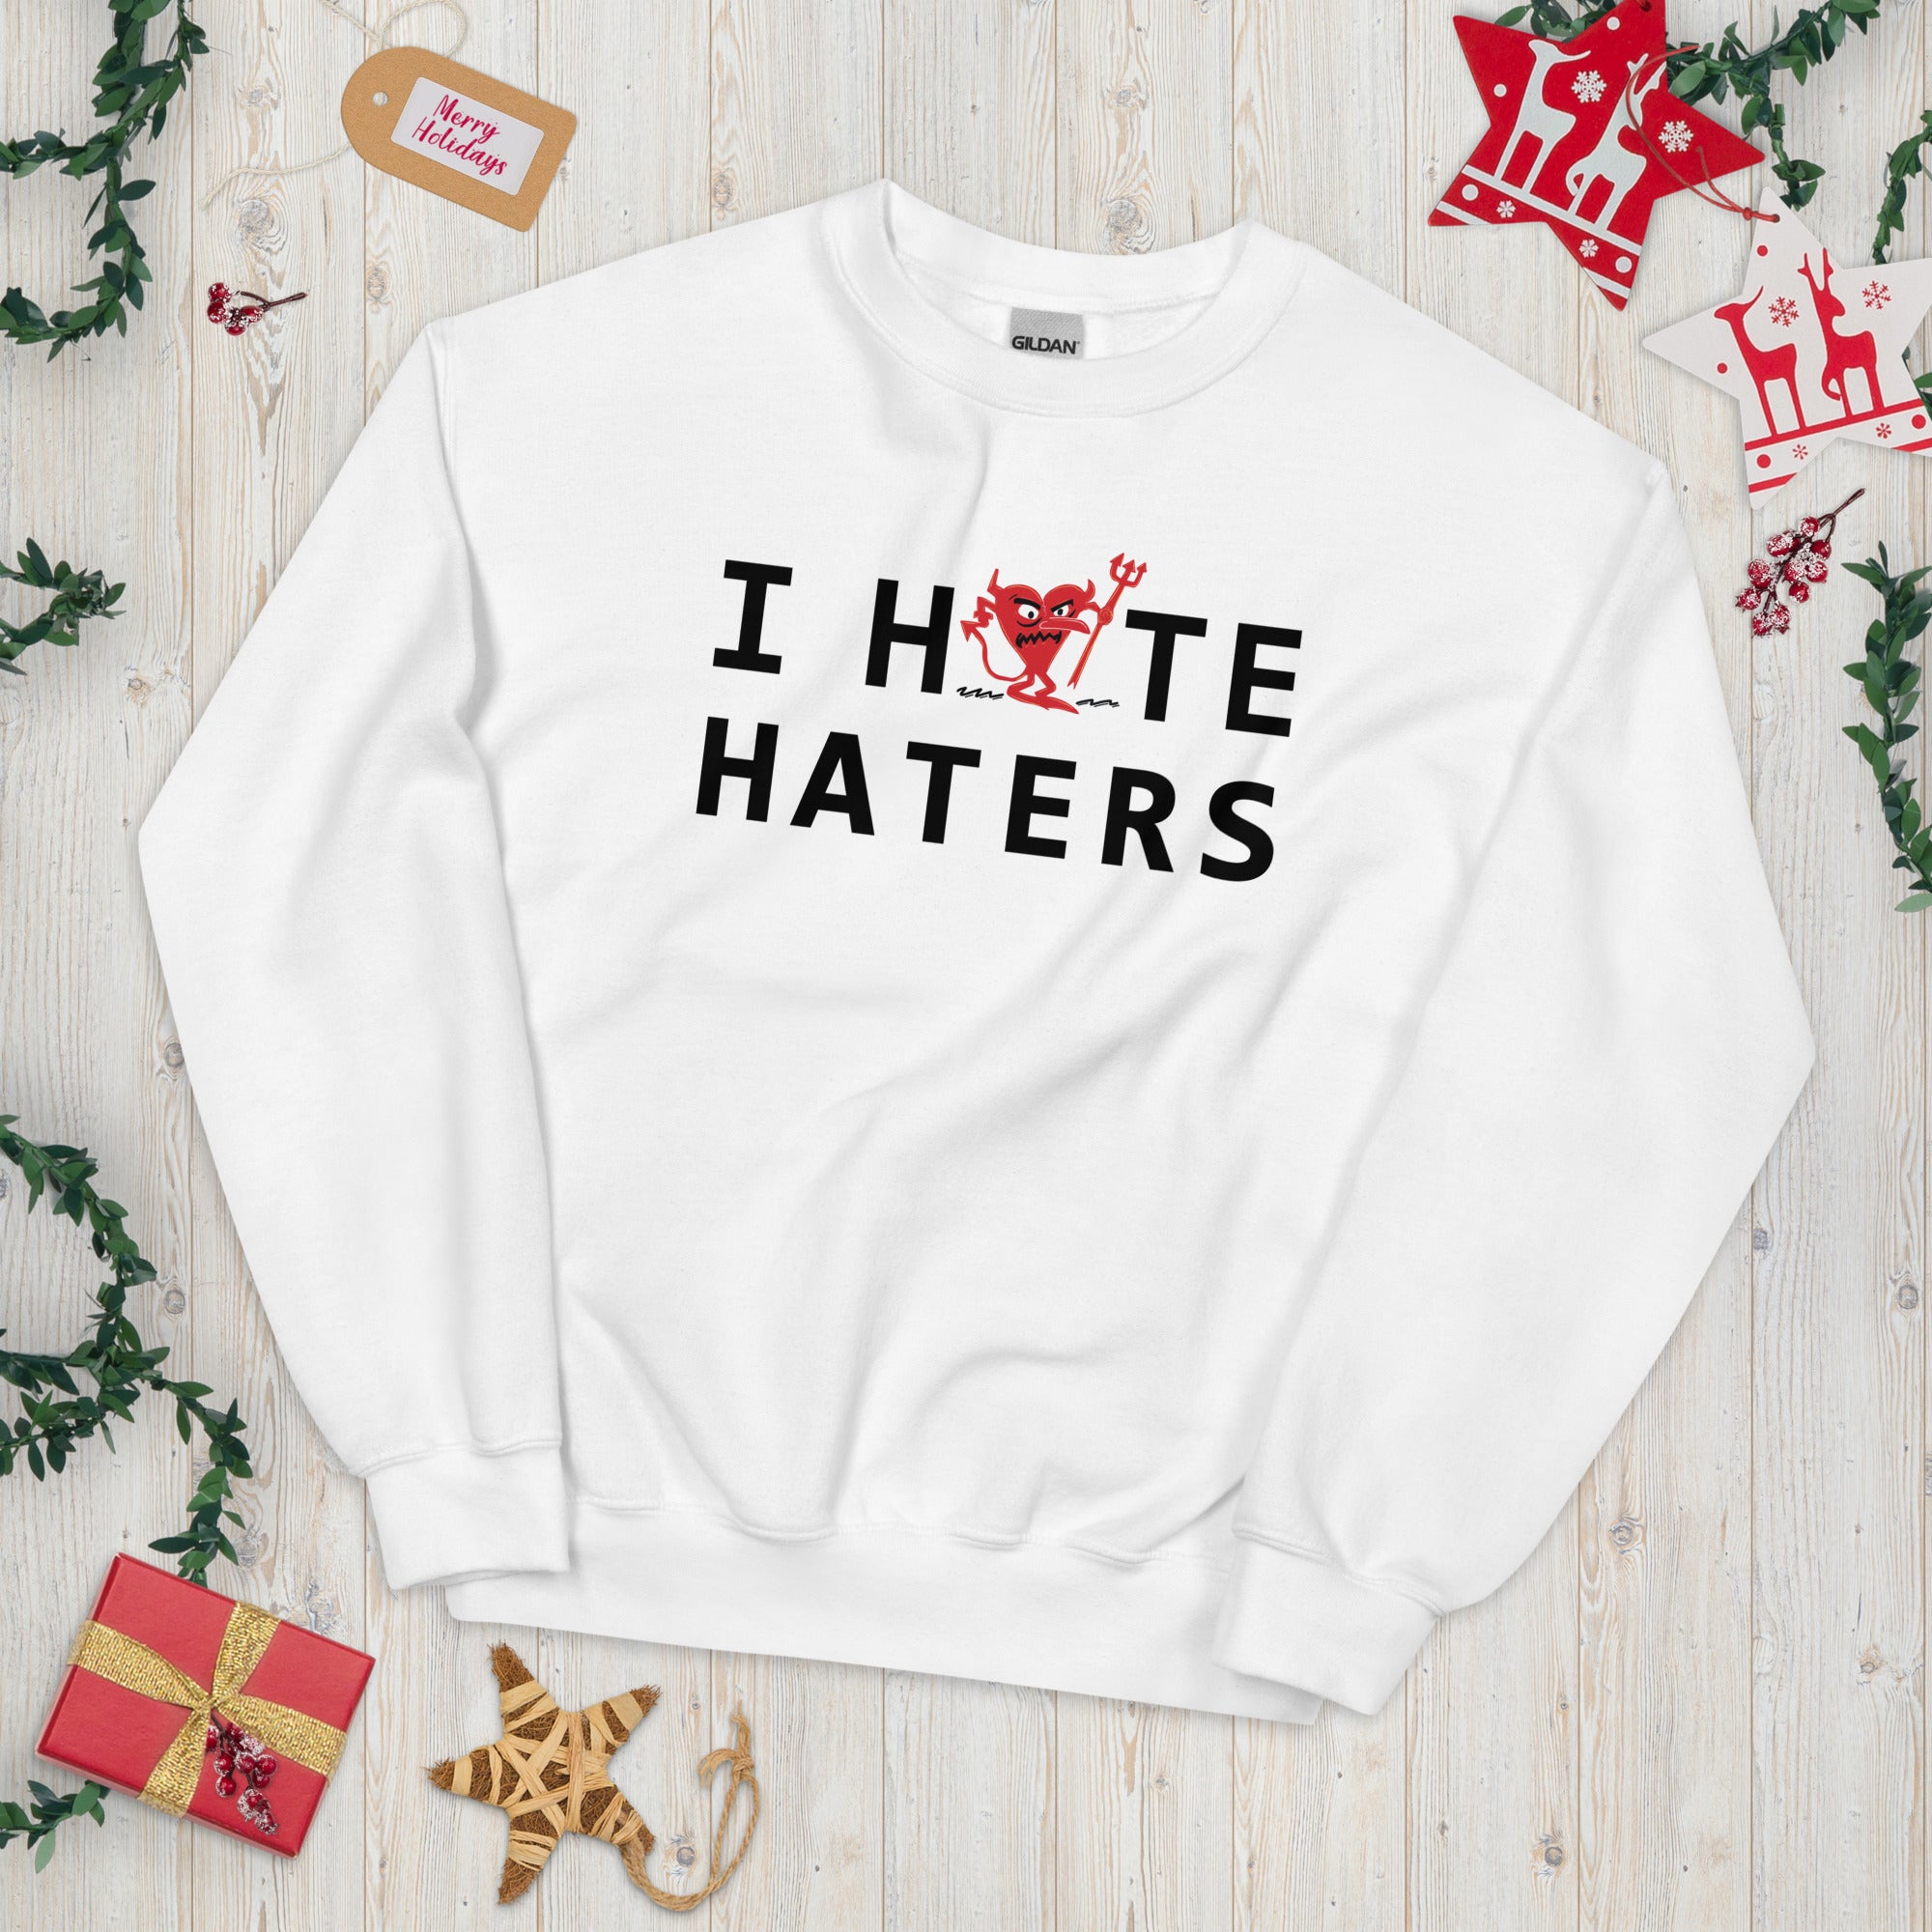 I Hate Haters Unisex Sweatshirt